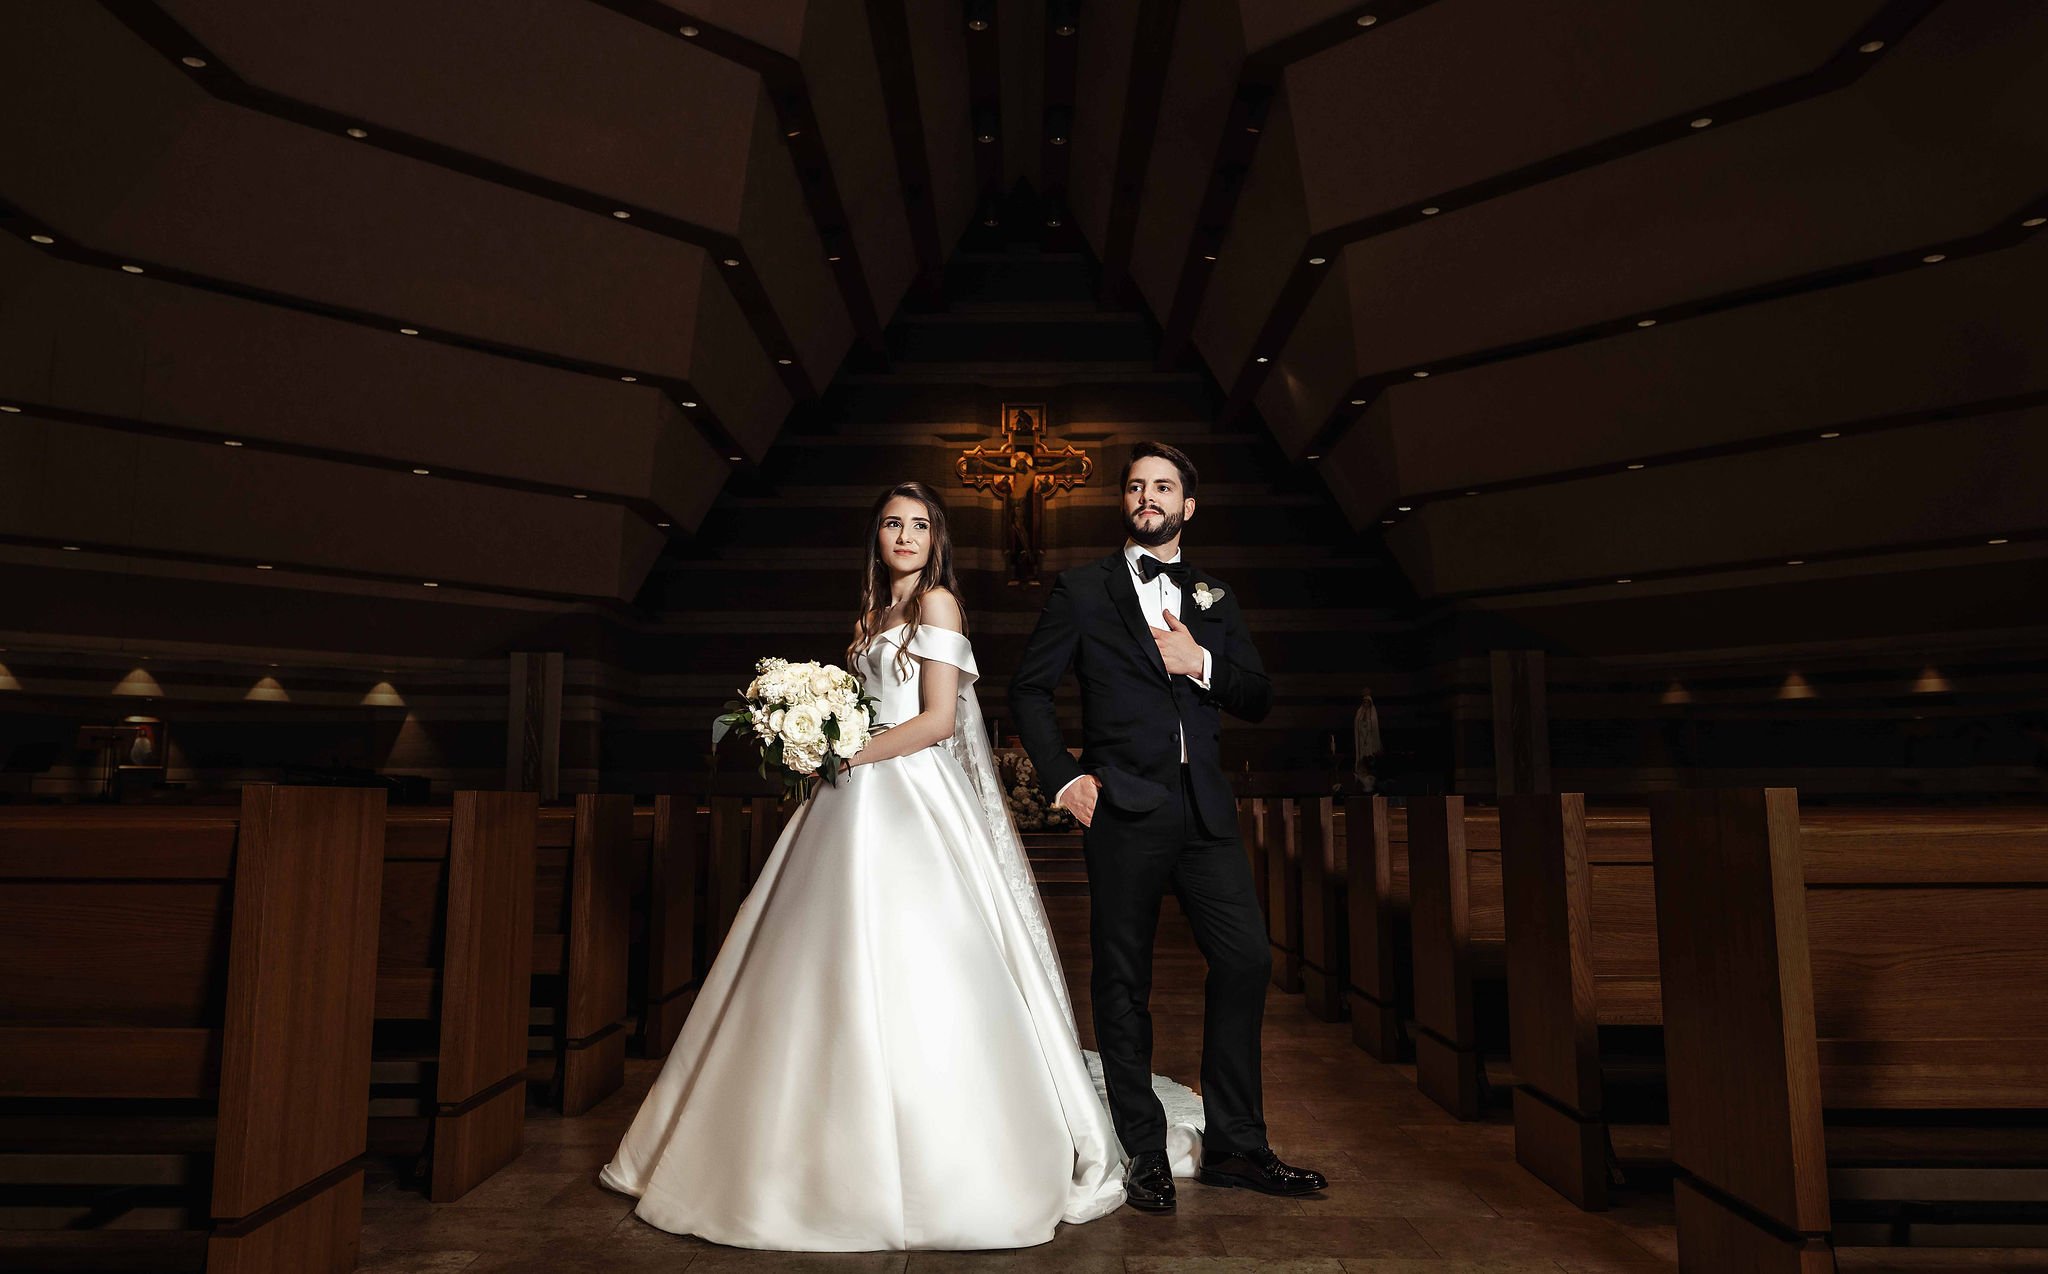 Dallas wedding couple - bride and groom - in church wedding.jpg